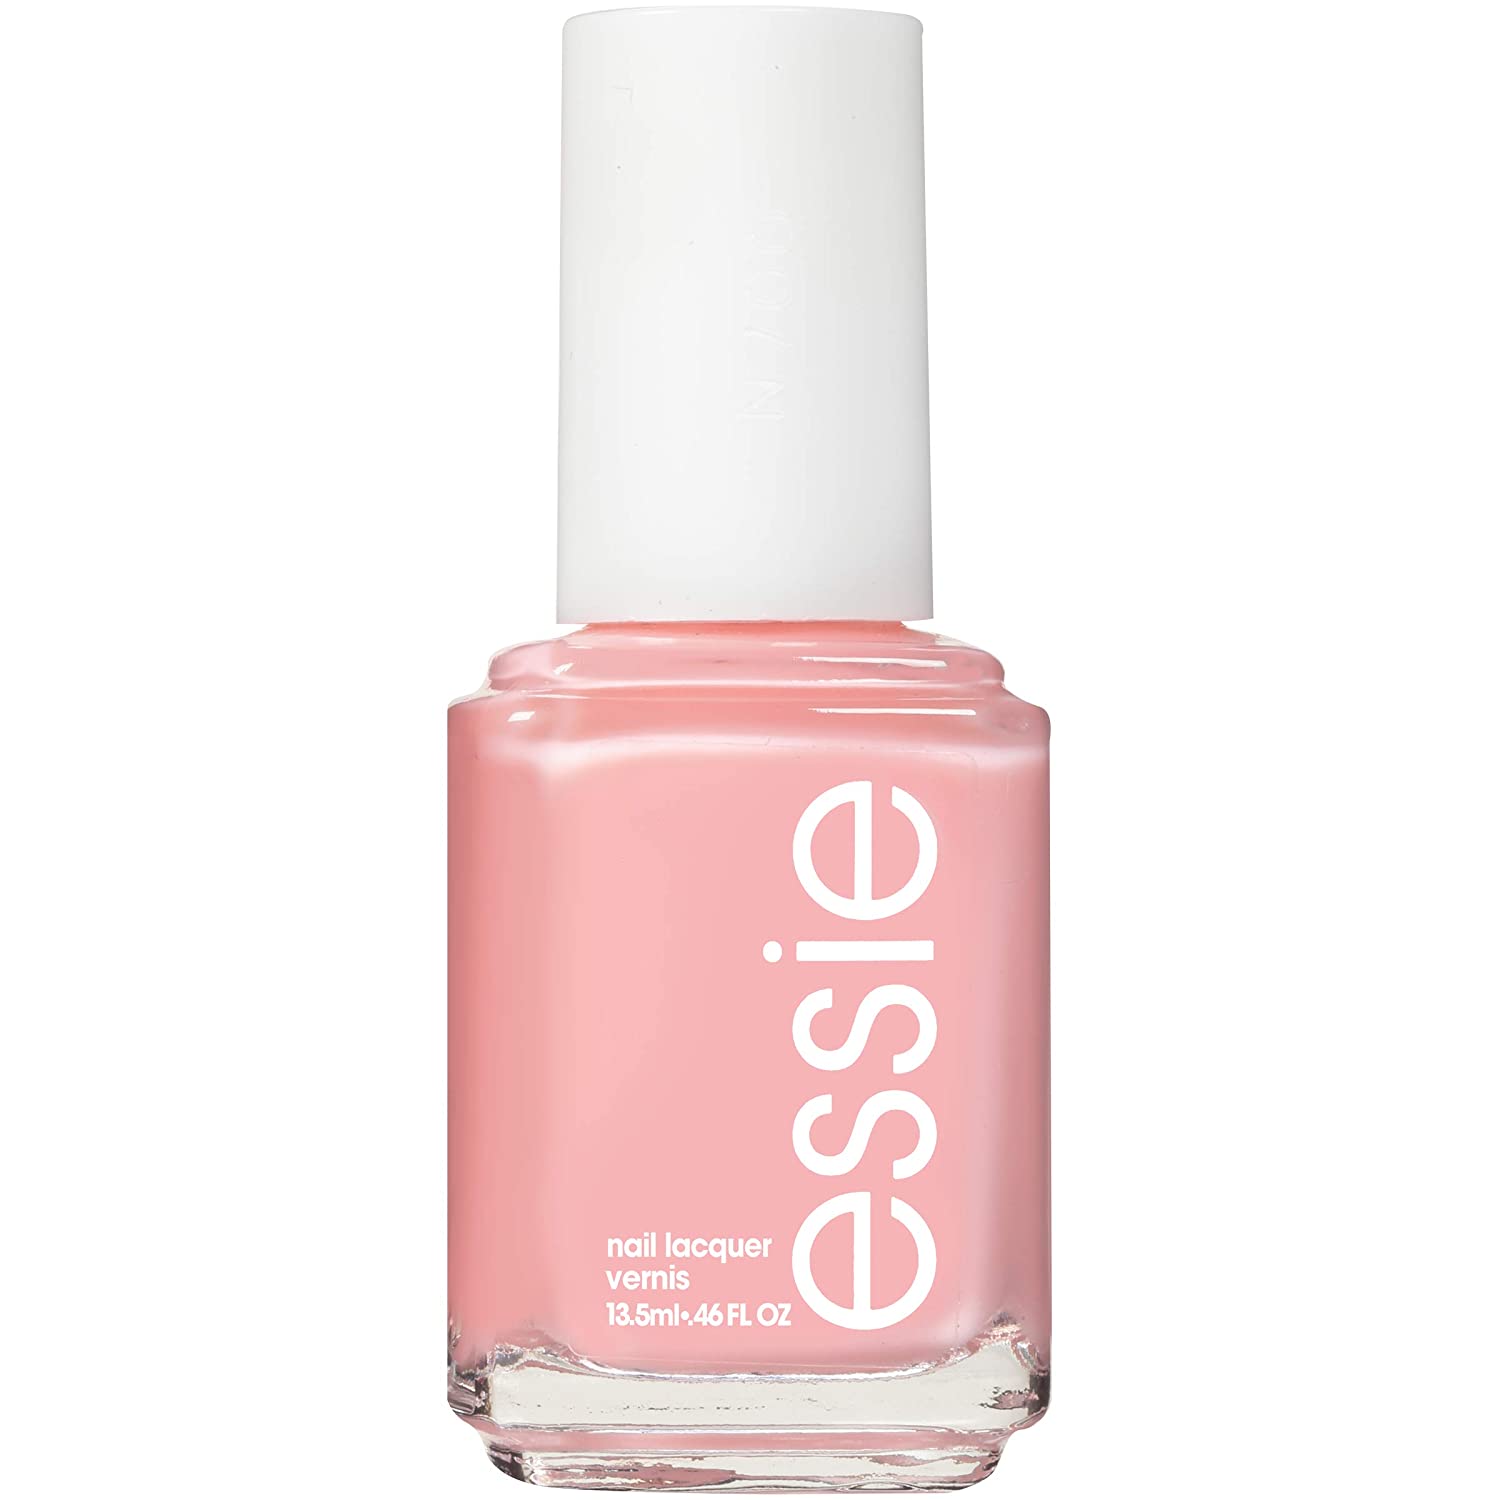 essie Glossy Shine Nail Polish (Hi Maintenance) $3.80 w/ S&S + Free Shipping w/ Amazon Prime or Orders $25+